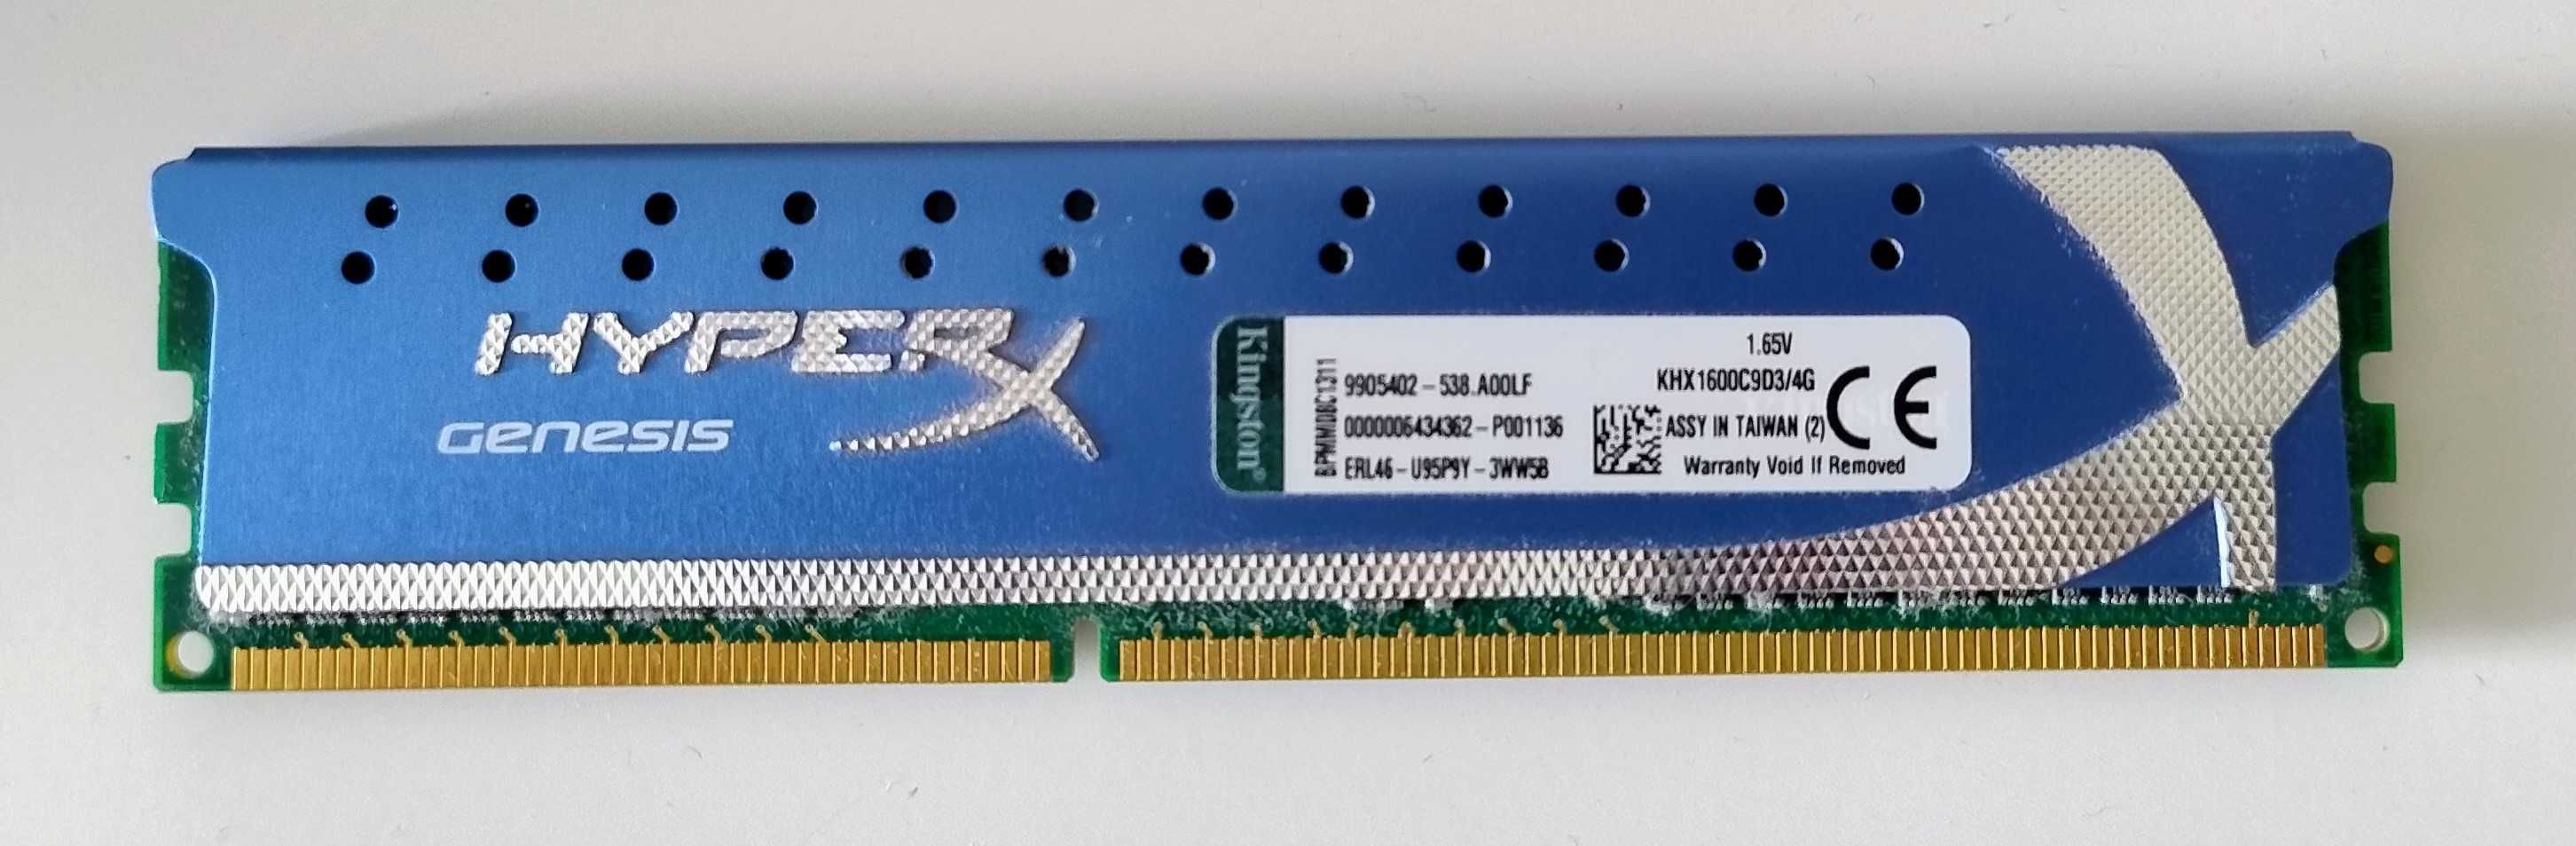 Kingston HyperX Genesis 4GB 1600MHz KHX1600C9D3